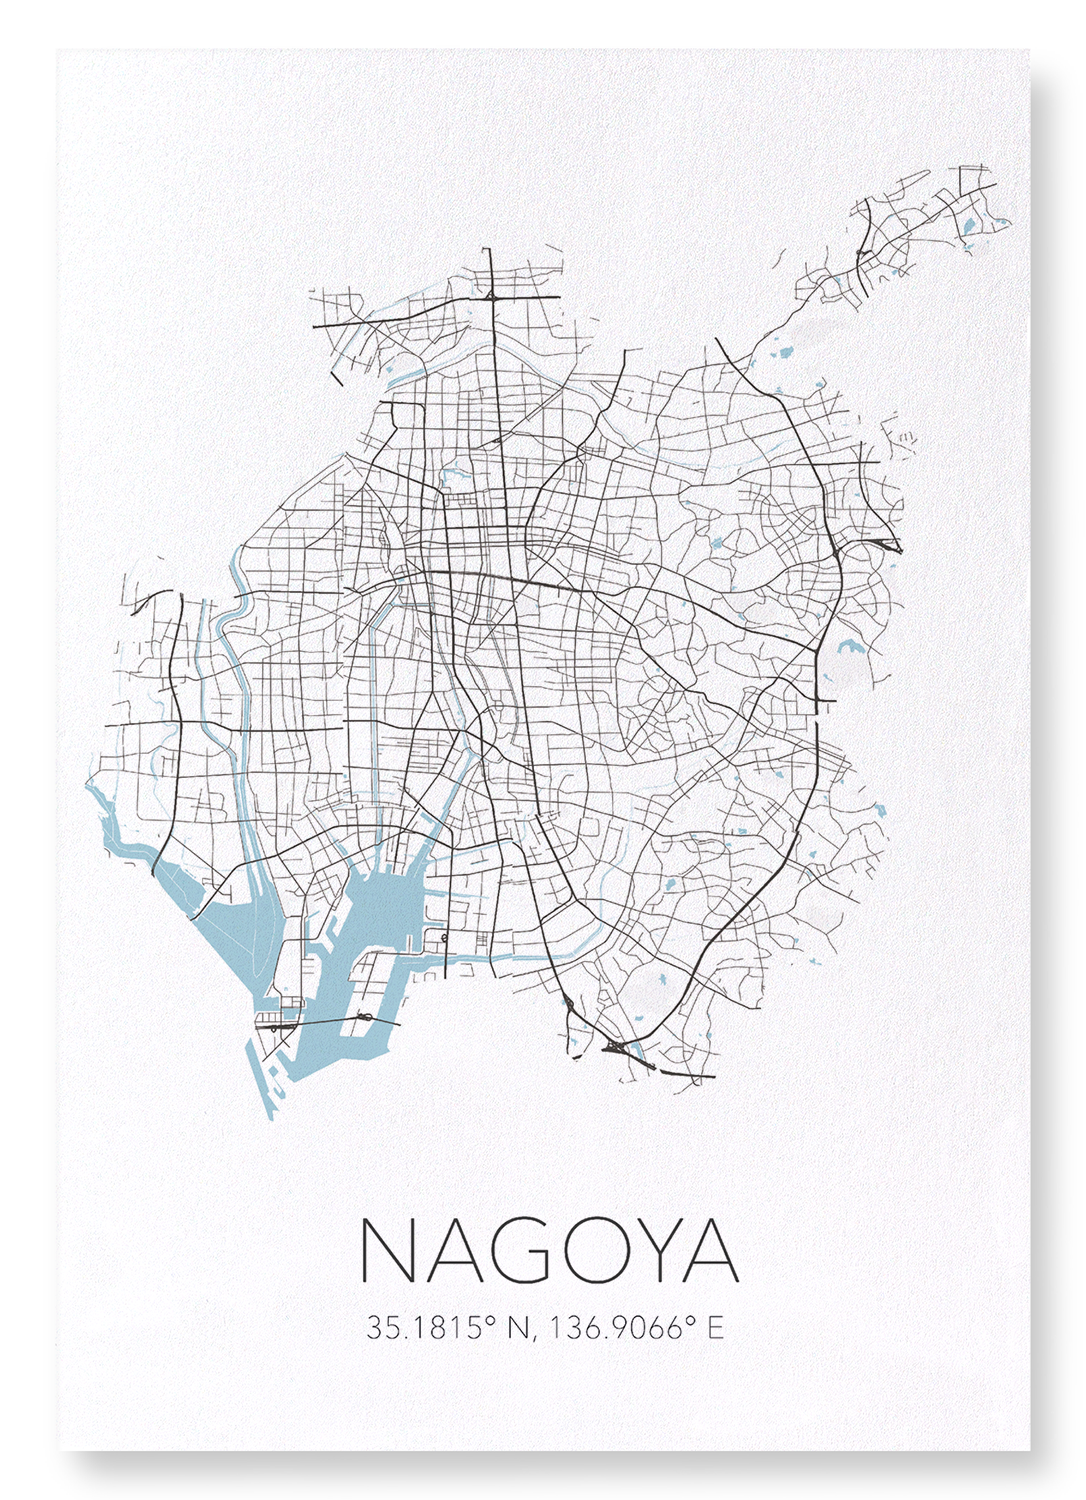 NAGOYA CUTOUT: Map Cutout Art Print